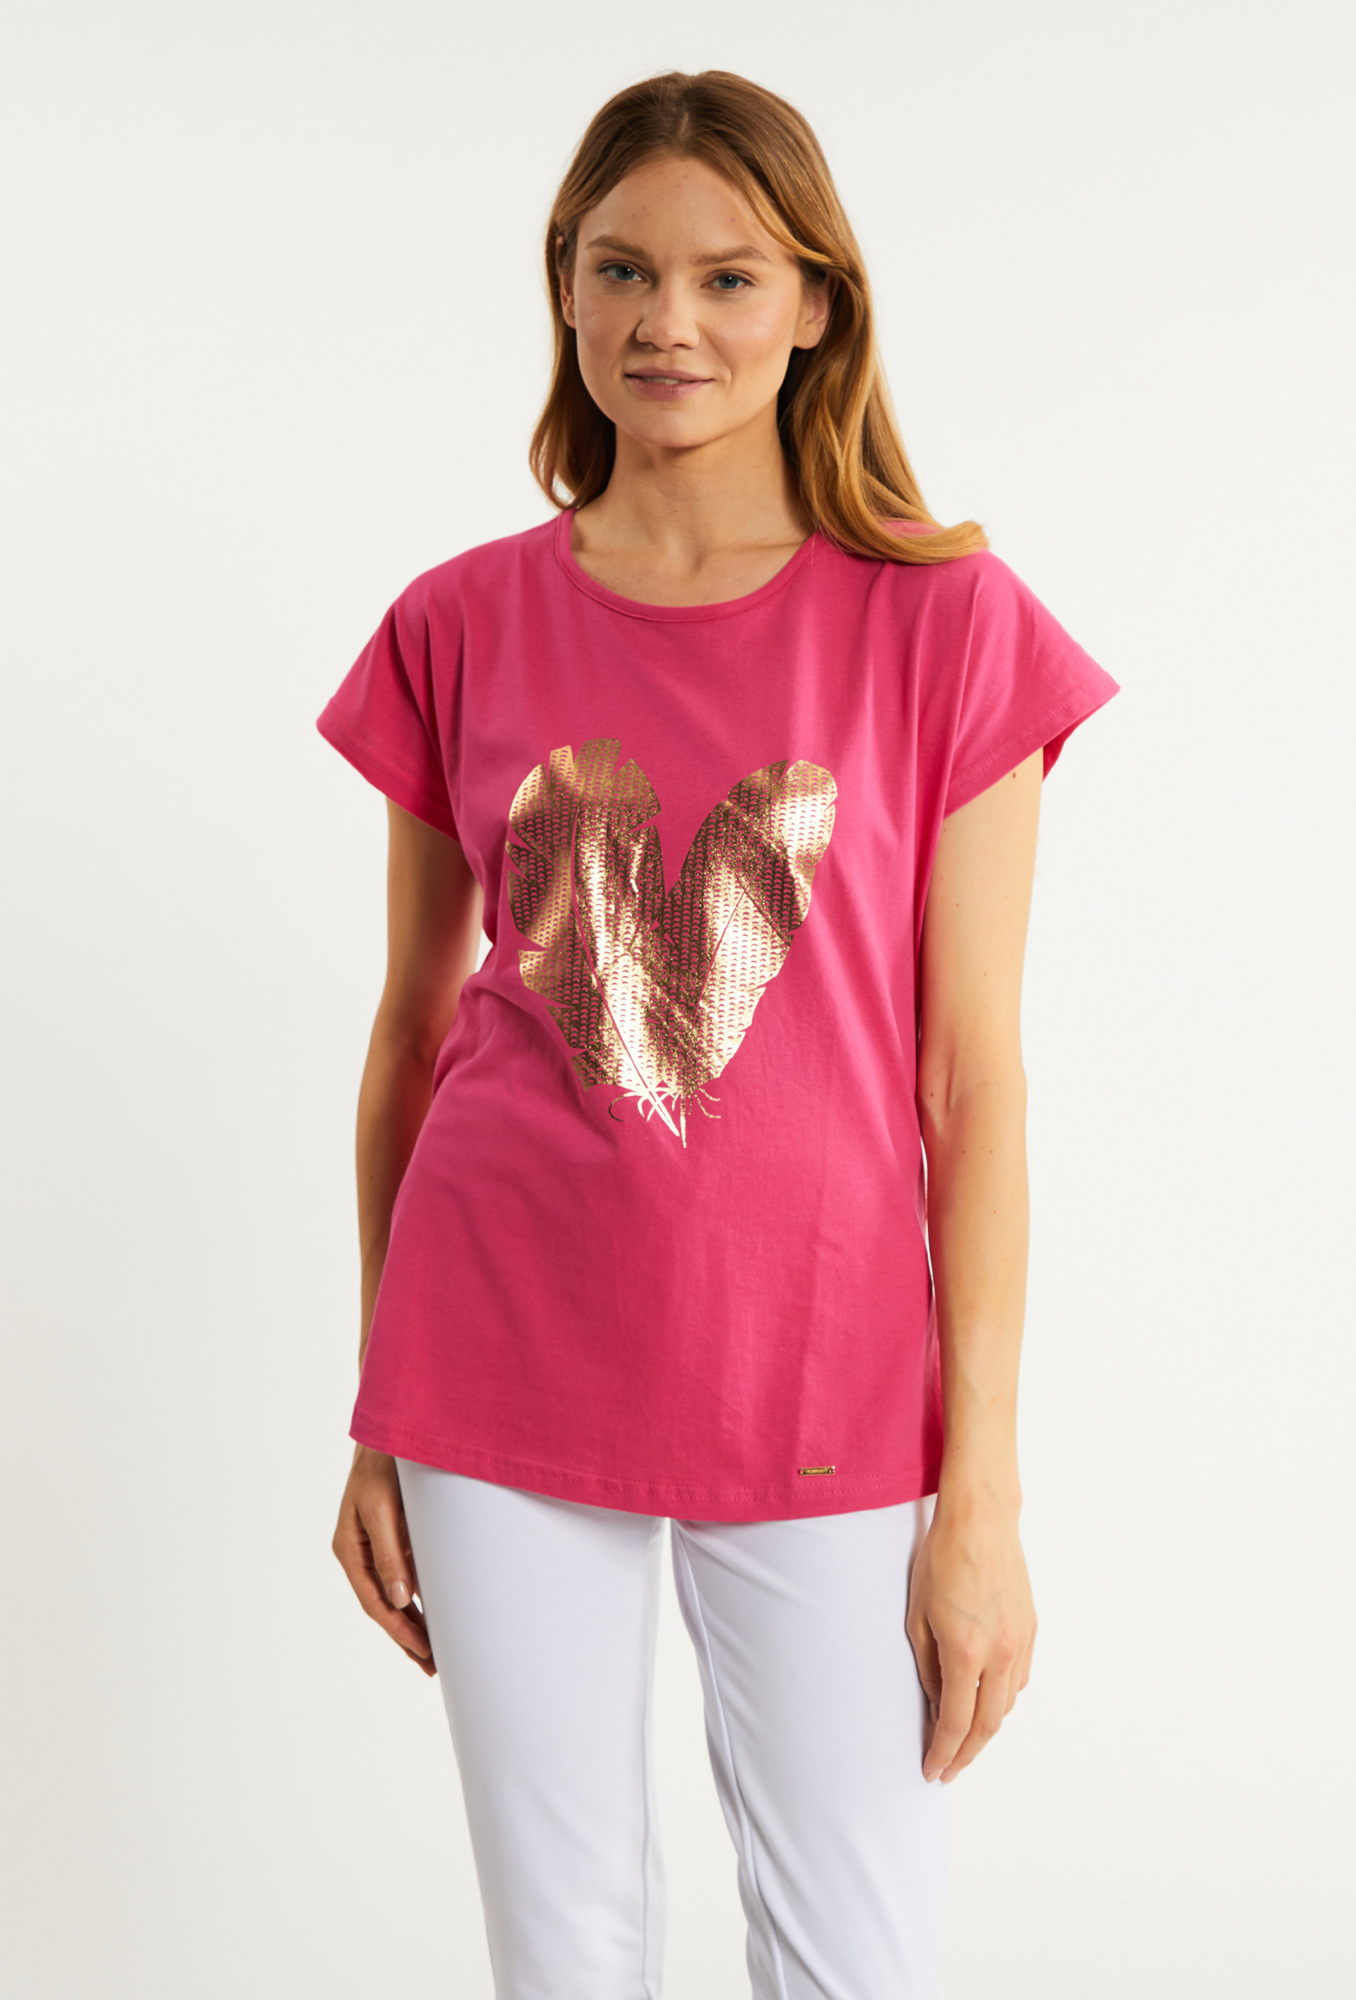 MONNARI Woman's T-Shirts Women's Cotton T-Shirt With An Interesting Pattern